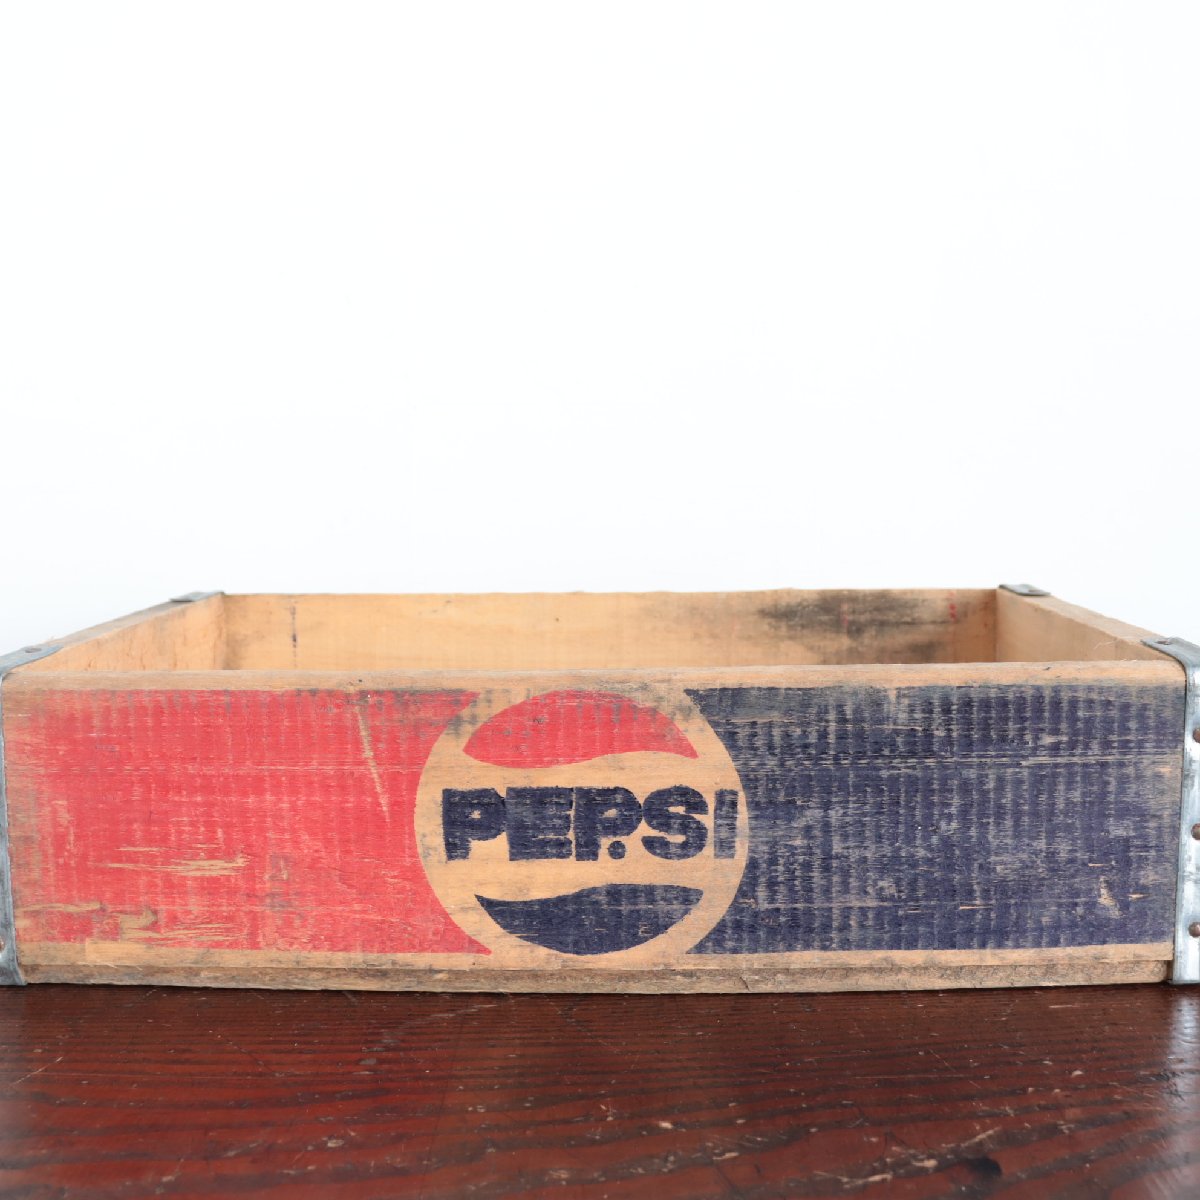 PEPSI ヴィンテージ 木箱 アメリカ ウッドボックス ペプシ 運搬箱 収納 